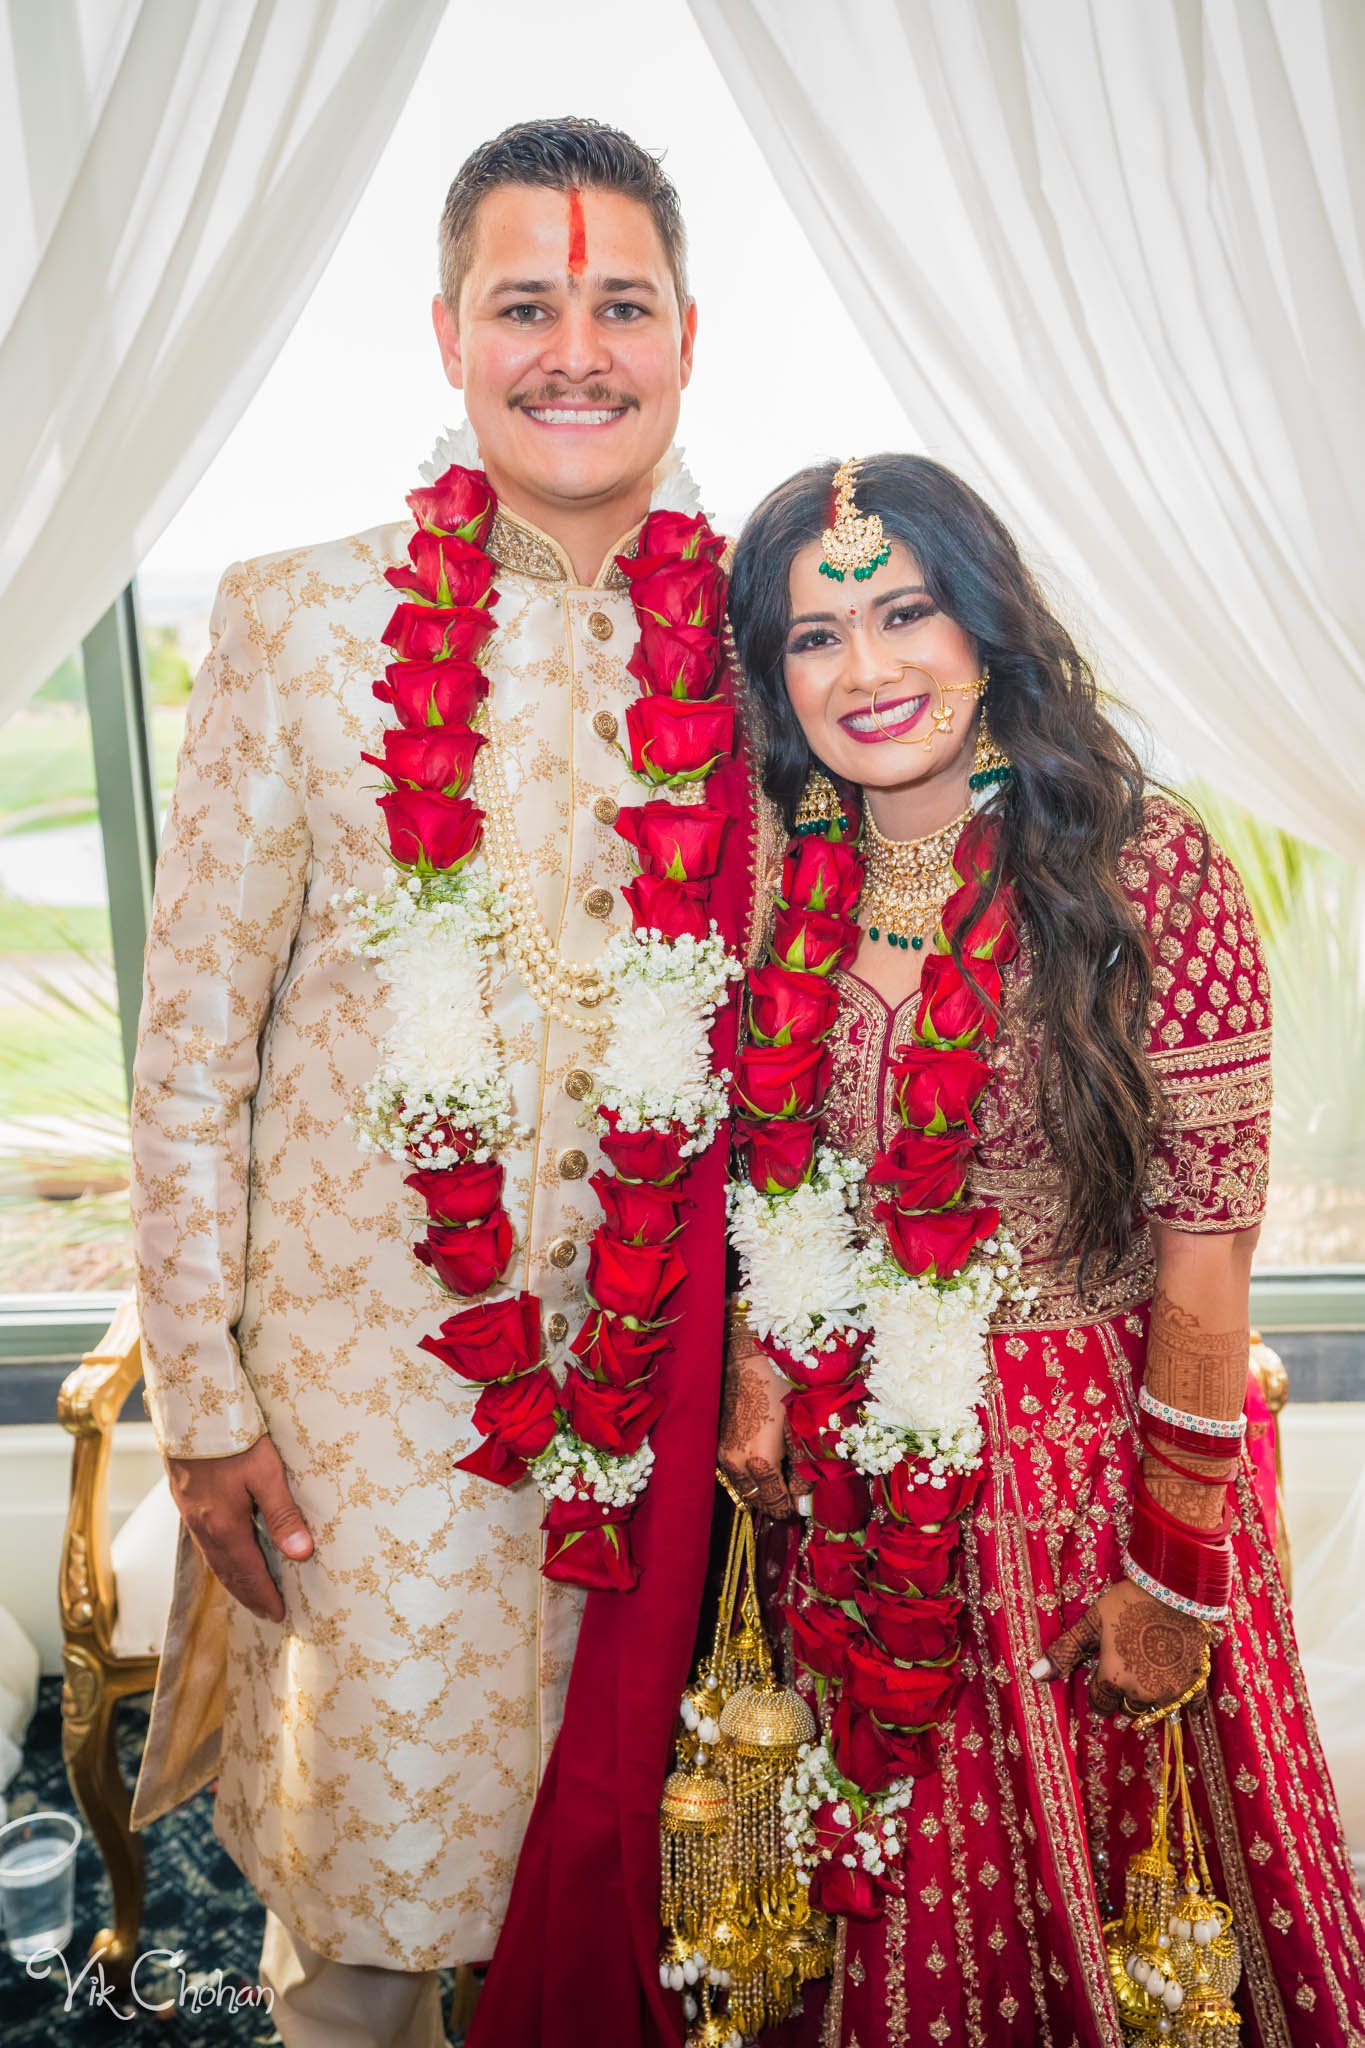 2022-06-09-Annie-&-Steven-Las-Vegas-Indian-Wedding-Ceremony-Photography-Vik-Chohan-Photography-Photo-Booth-Social-Media-VCP-208.jpg